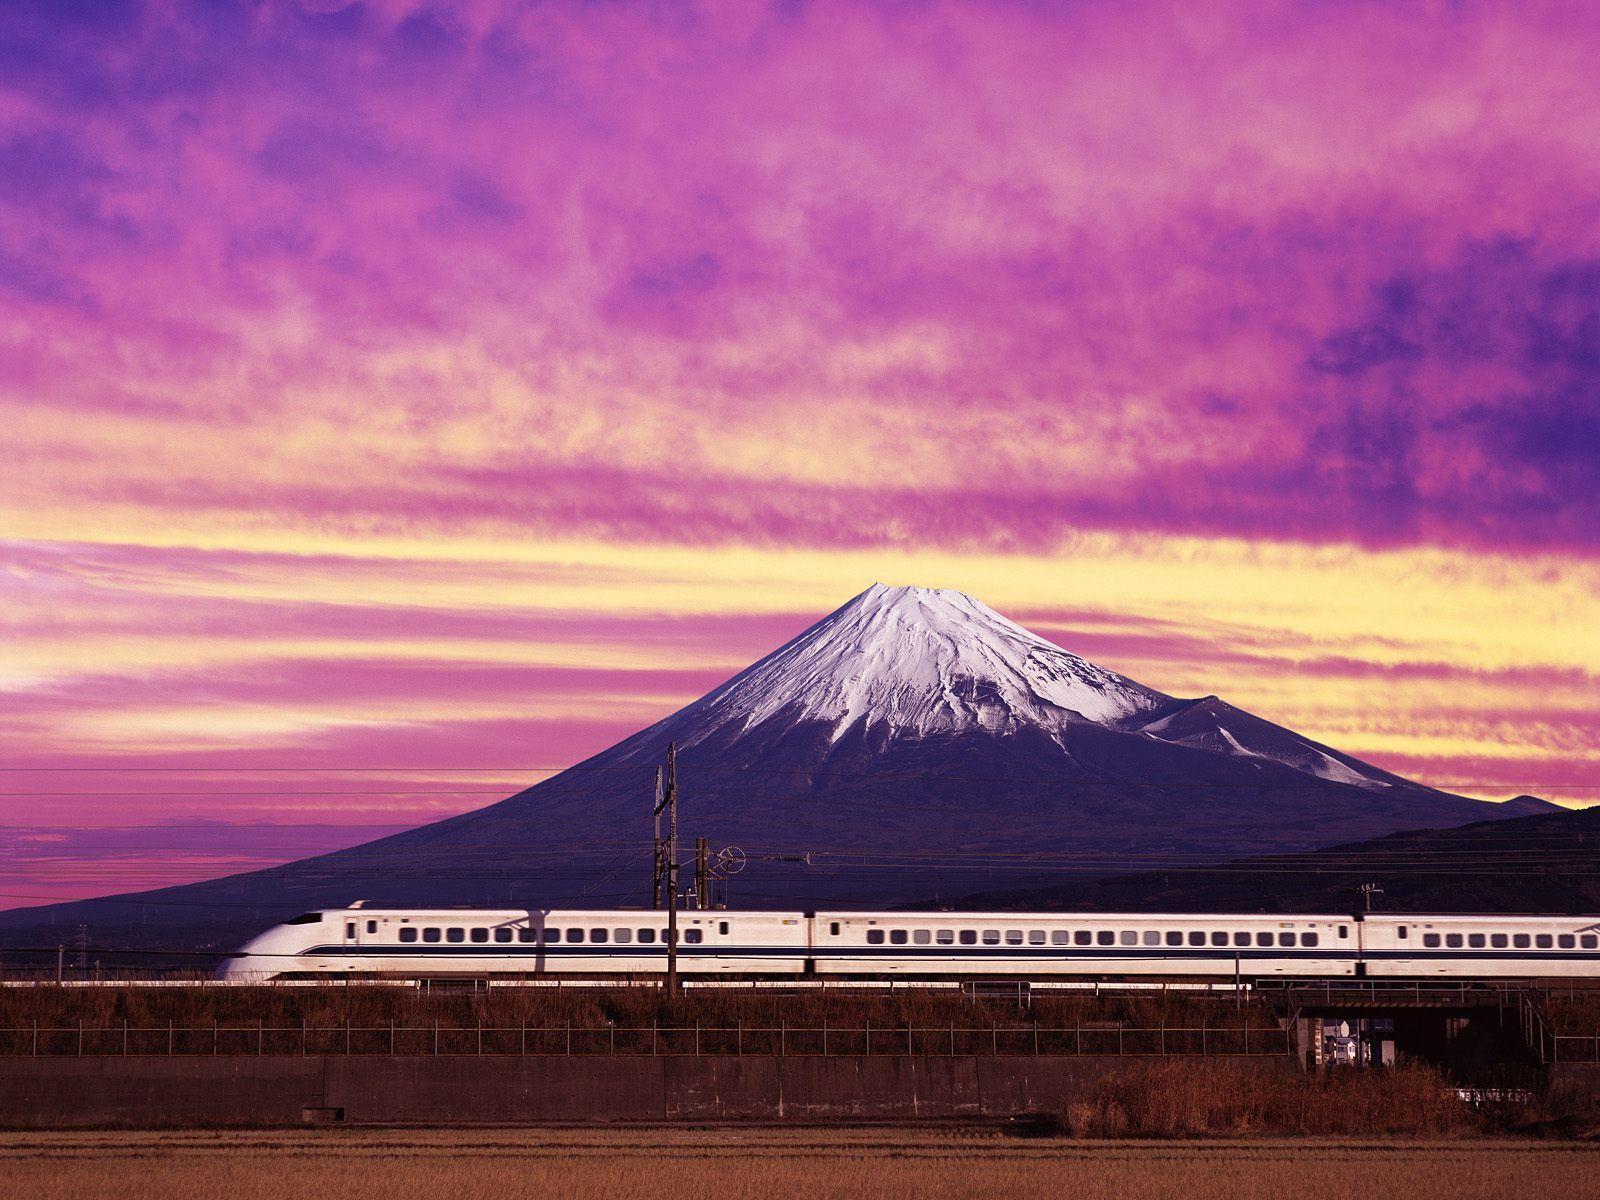 best image about Mt. Fuji